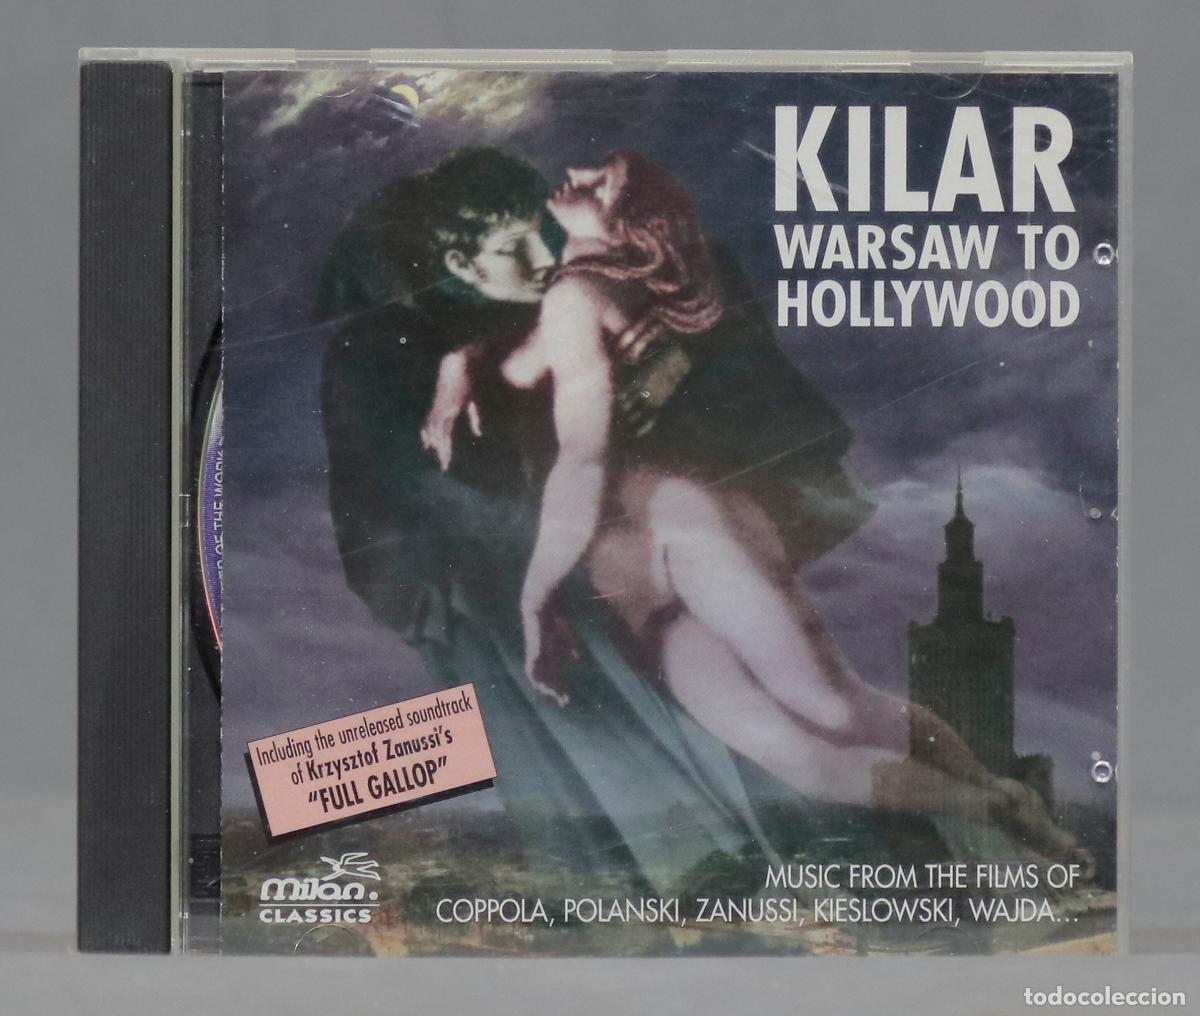 Kilar from Before Hollywood Studio Orchestra Soundtracks-